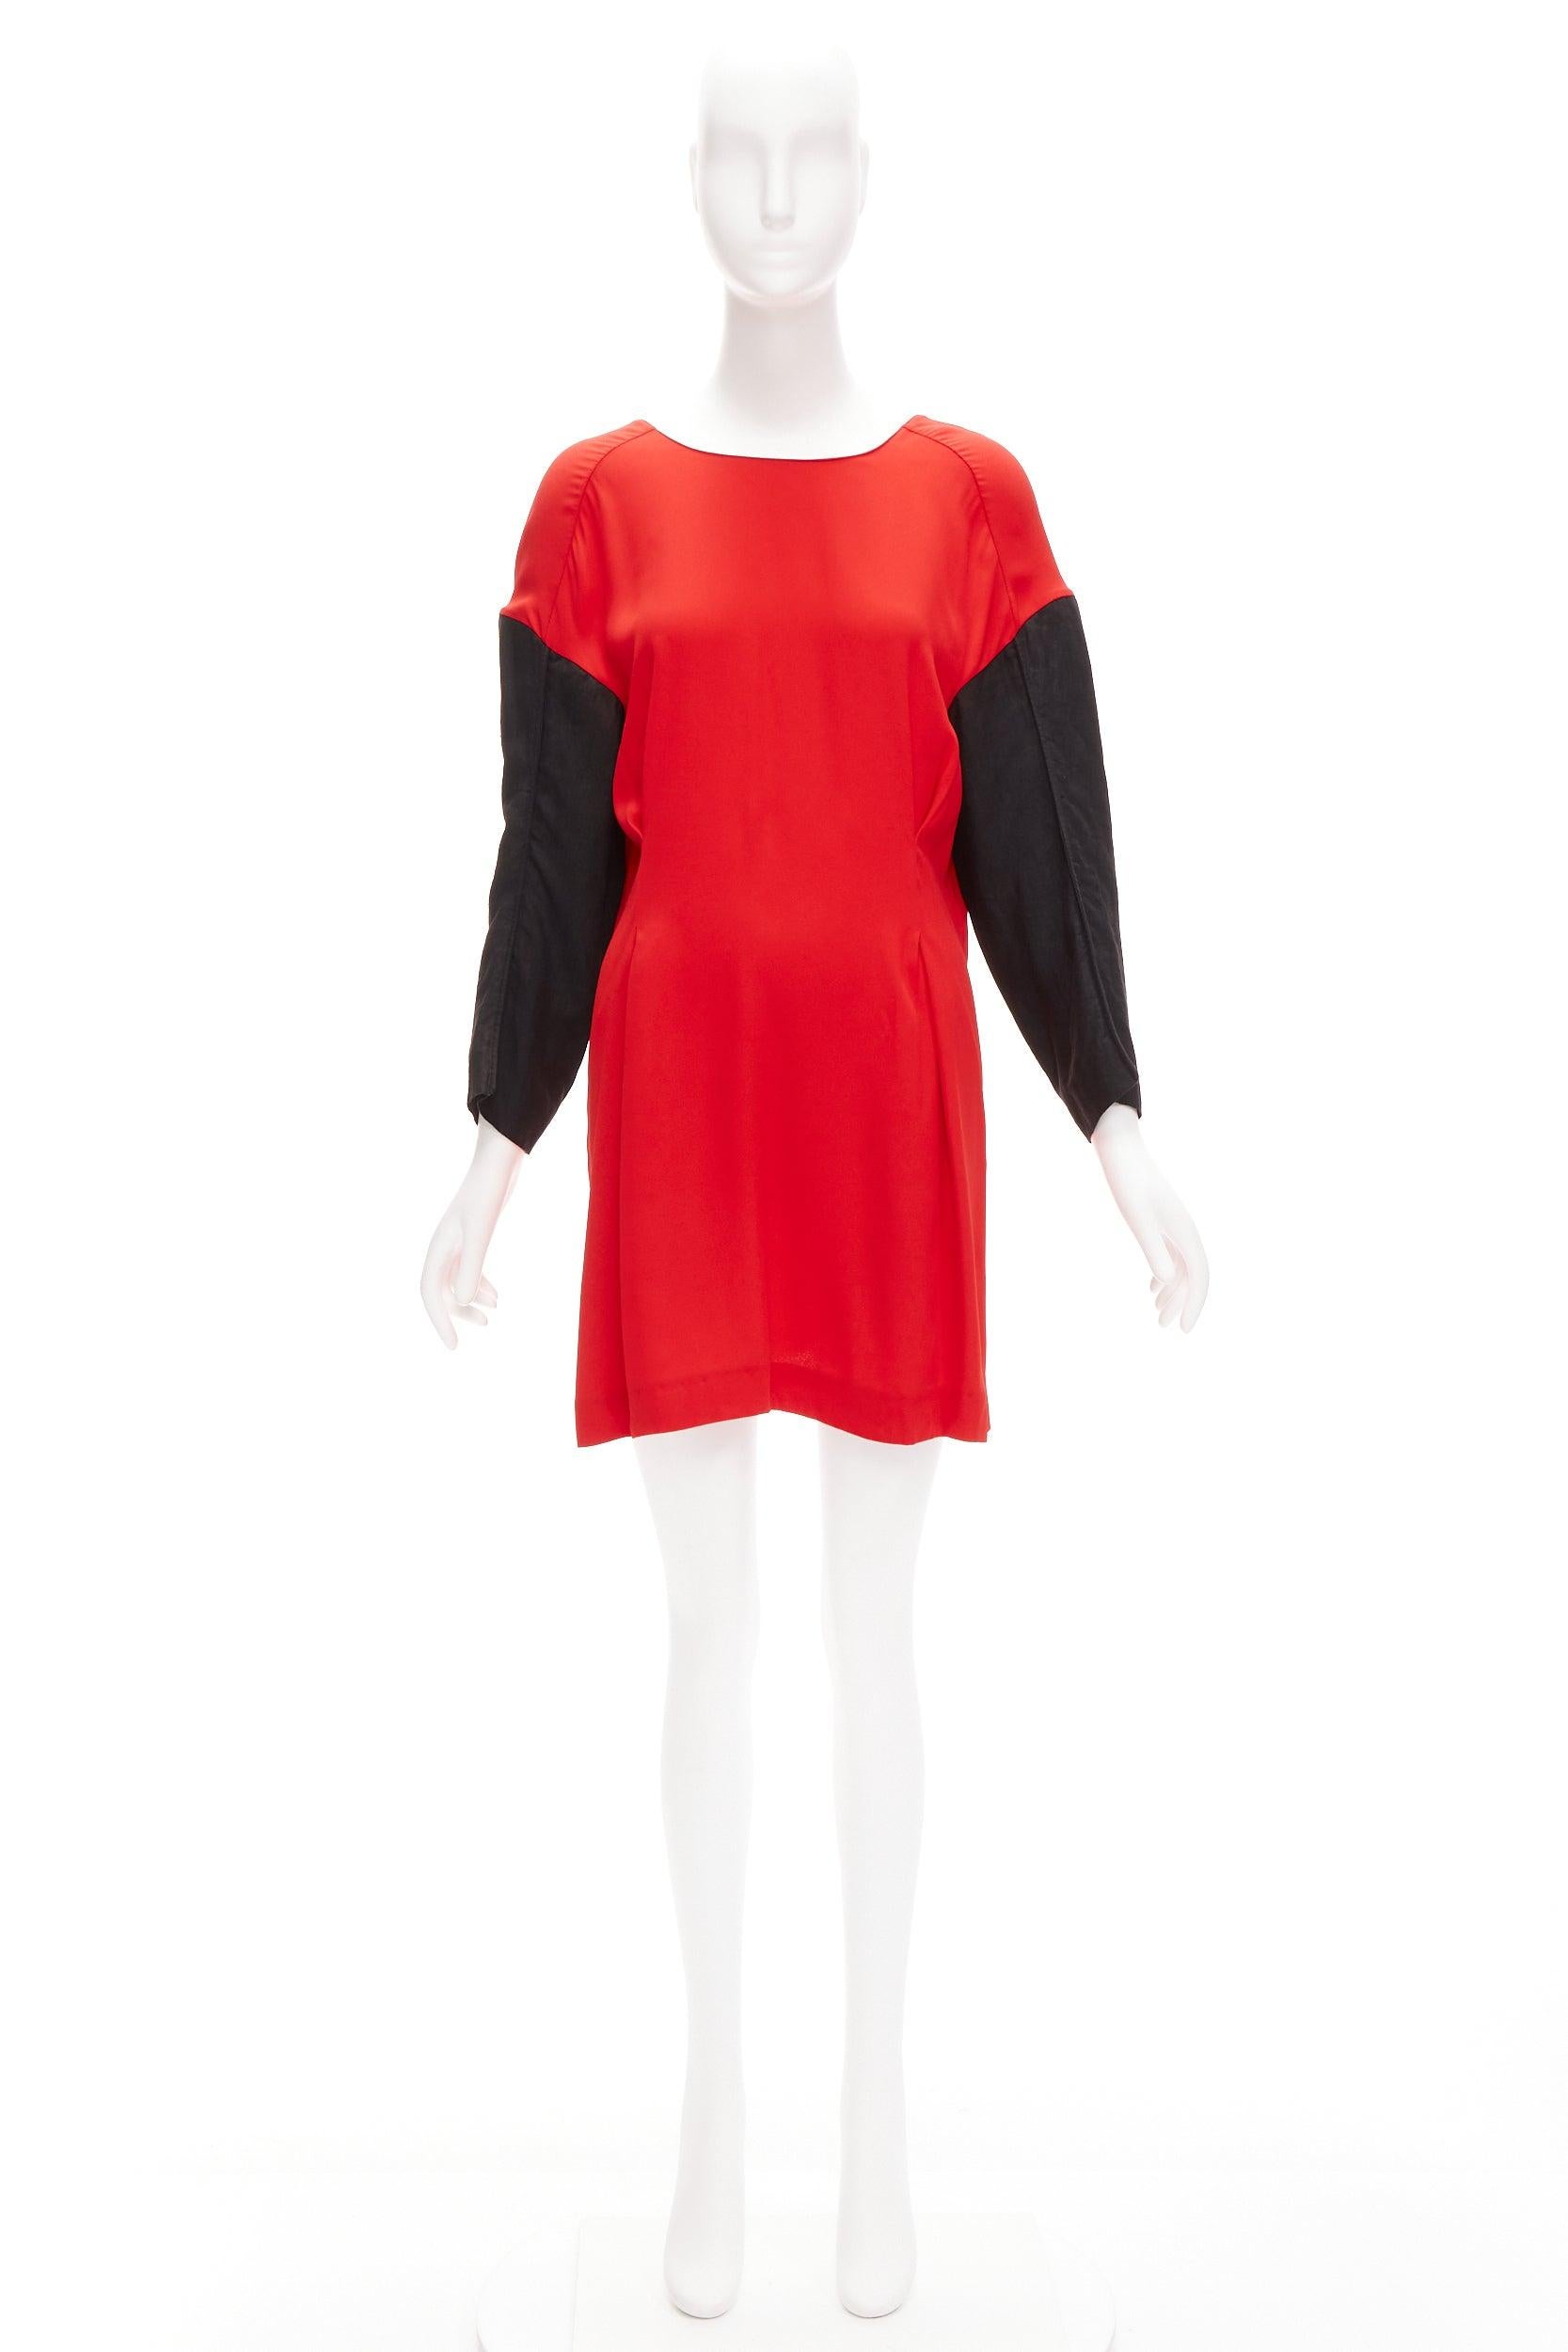 MARNI red black contrast cutout armhole bateau tie back mini dress IT38 XS For Sale 3